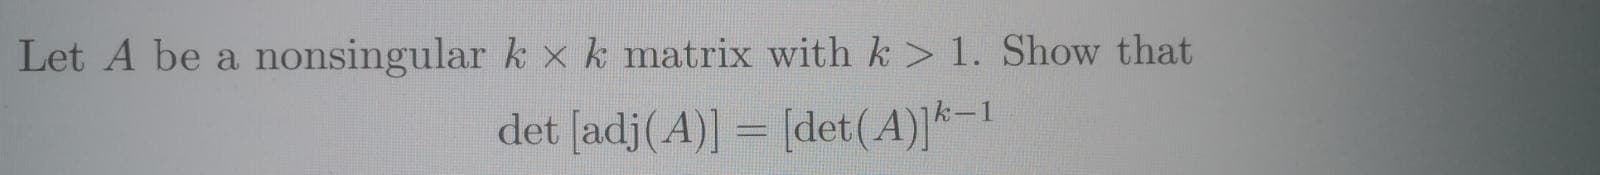 Let A be a nonsingular k x k matrix with k> 1. Show that.
det [adj(A)]
= [det(A)]*-1
